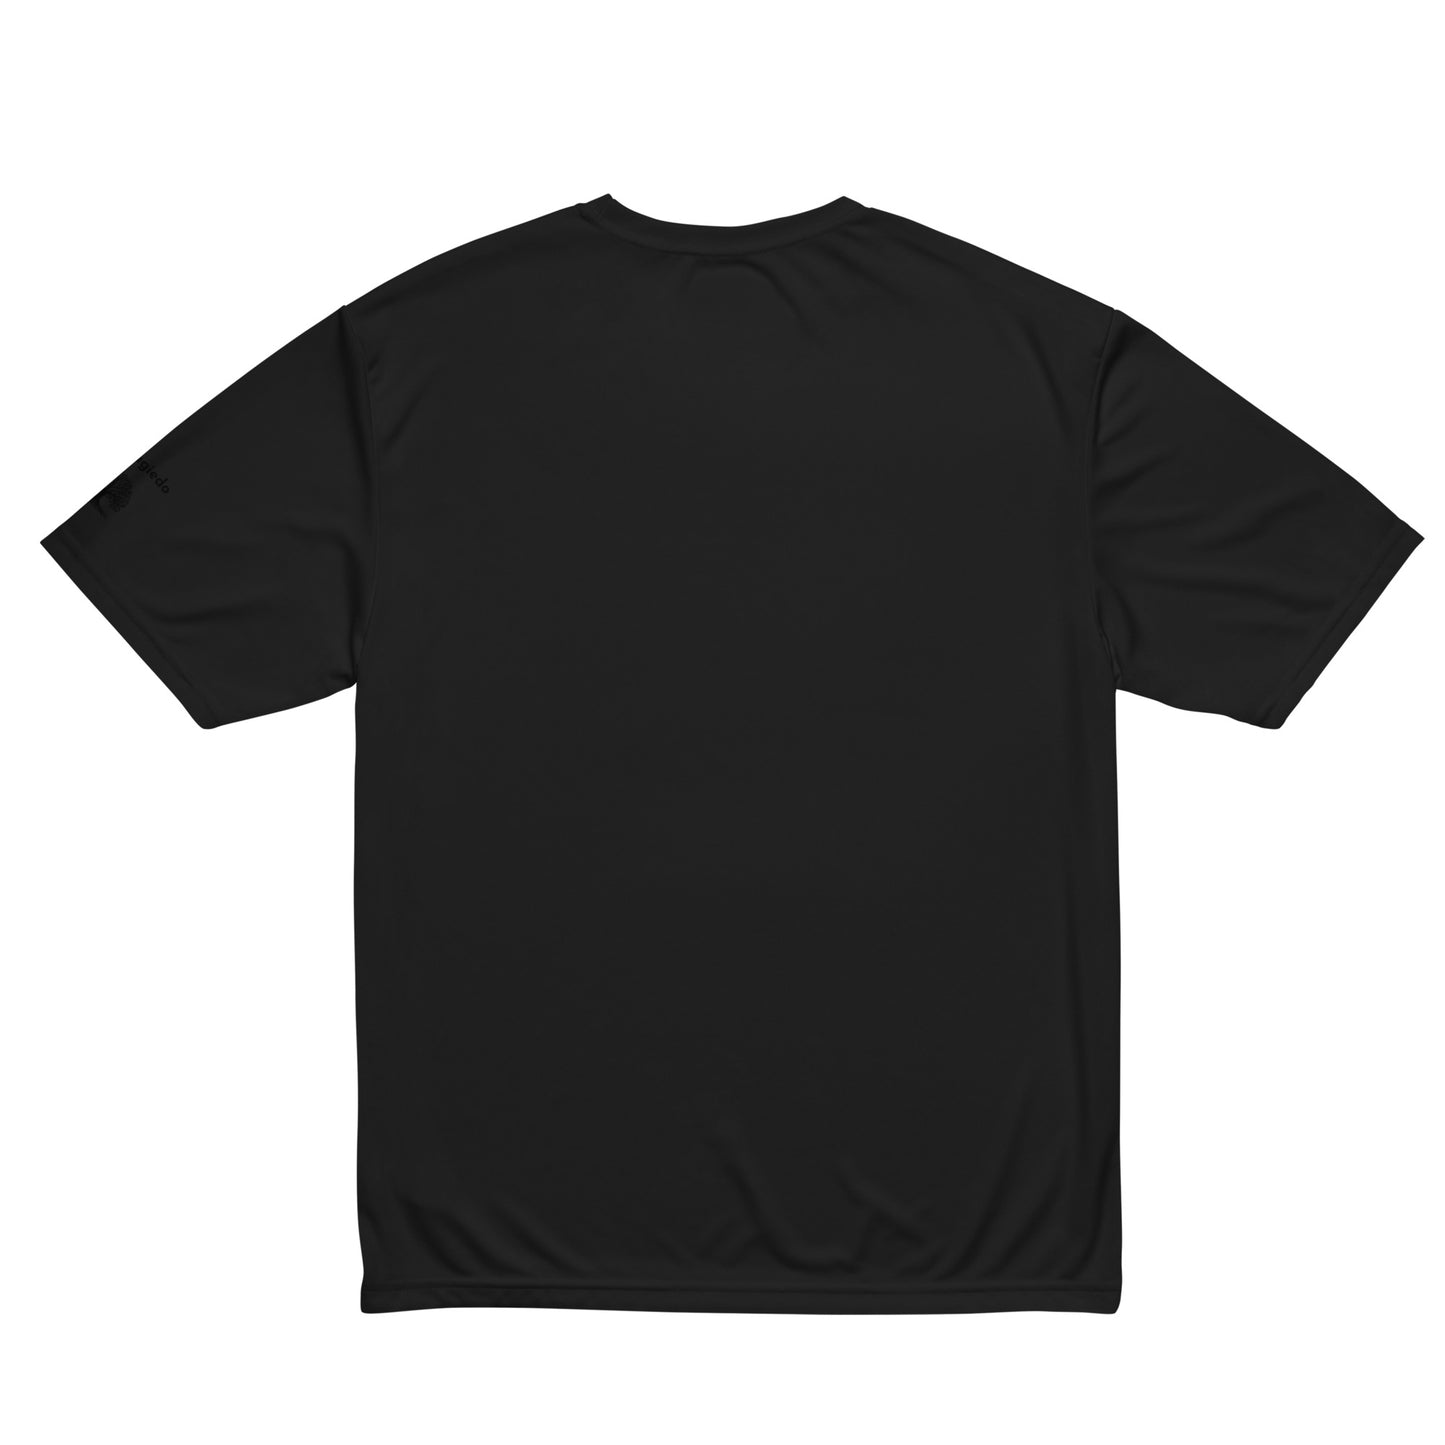 Unisex performance crew neck t-shirt - Football (Black)